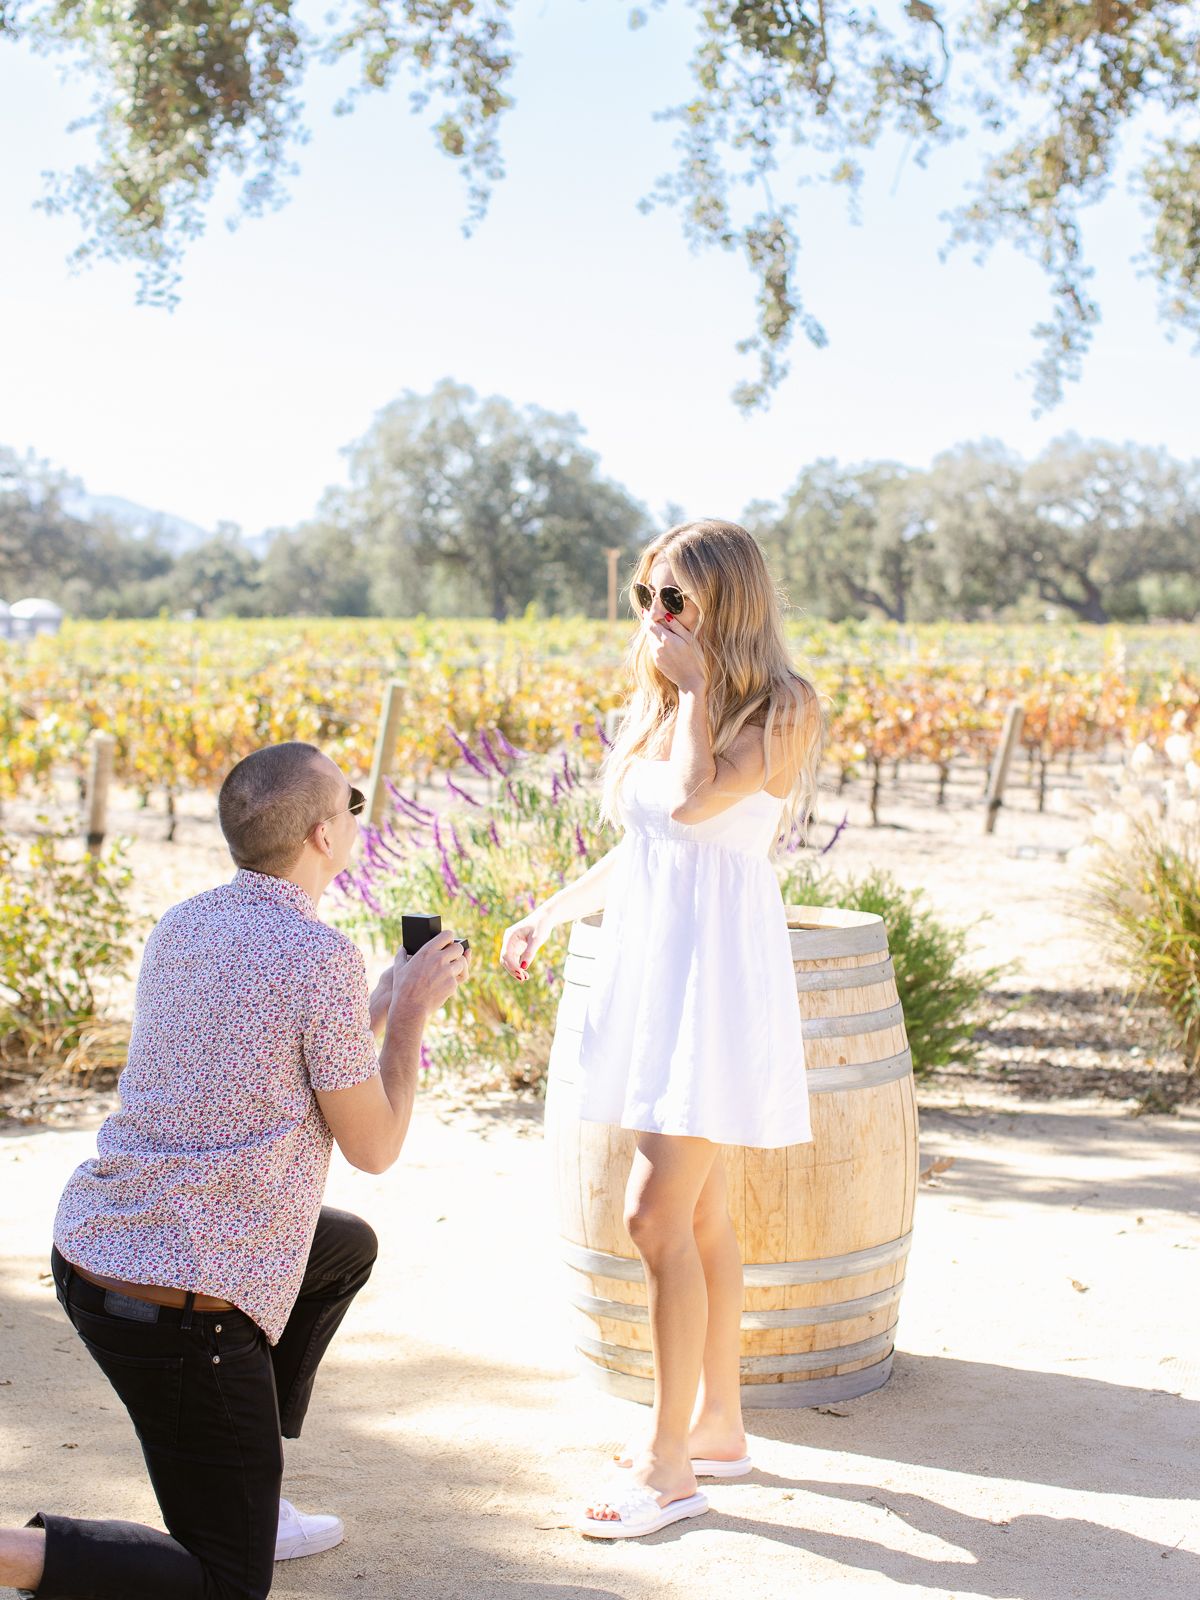 Groom proposing to girlfriend